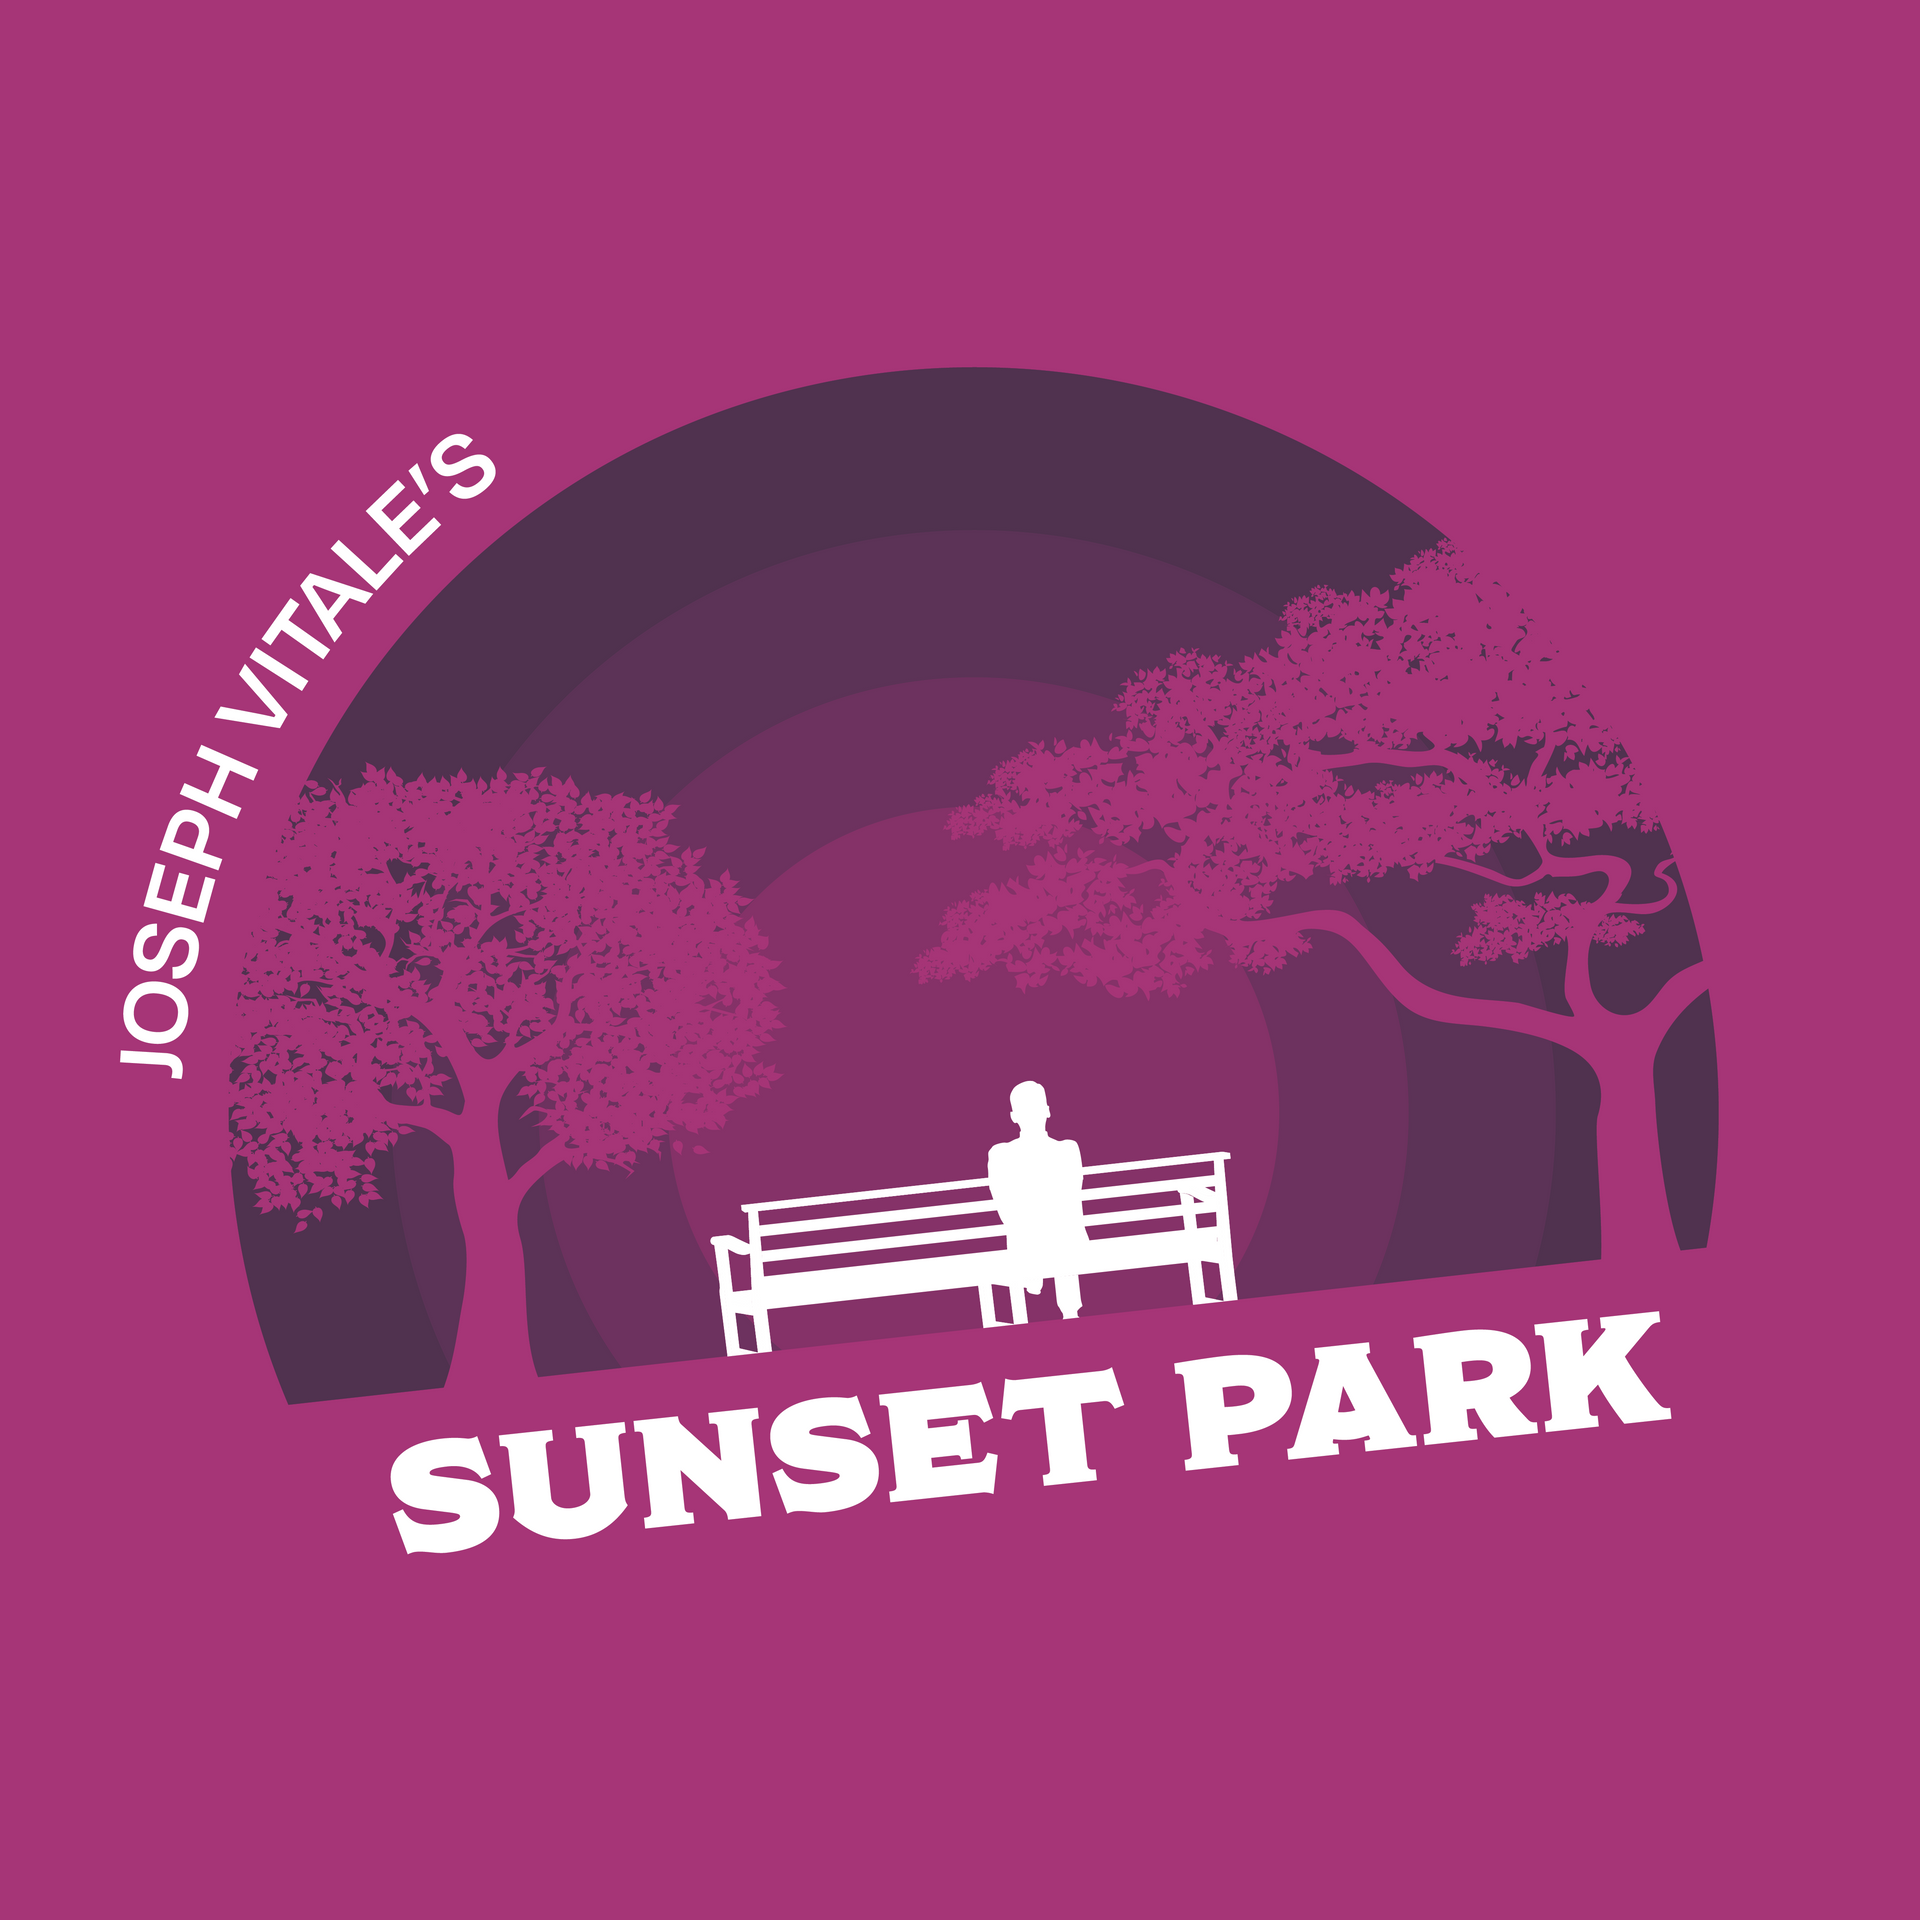 Joseph Vitale's Sunset Park